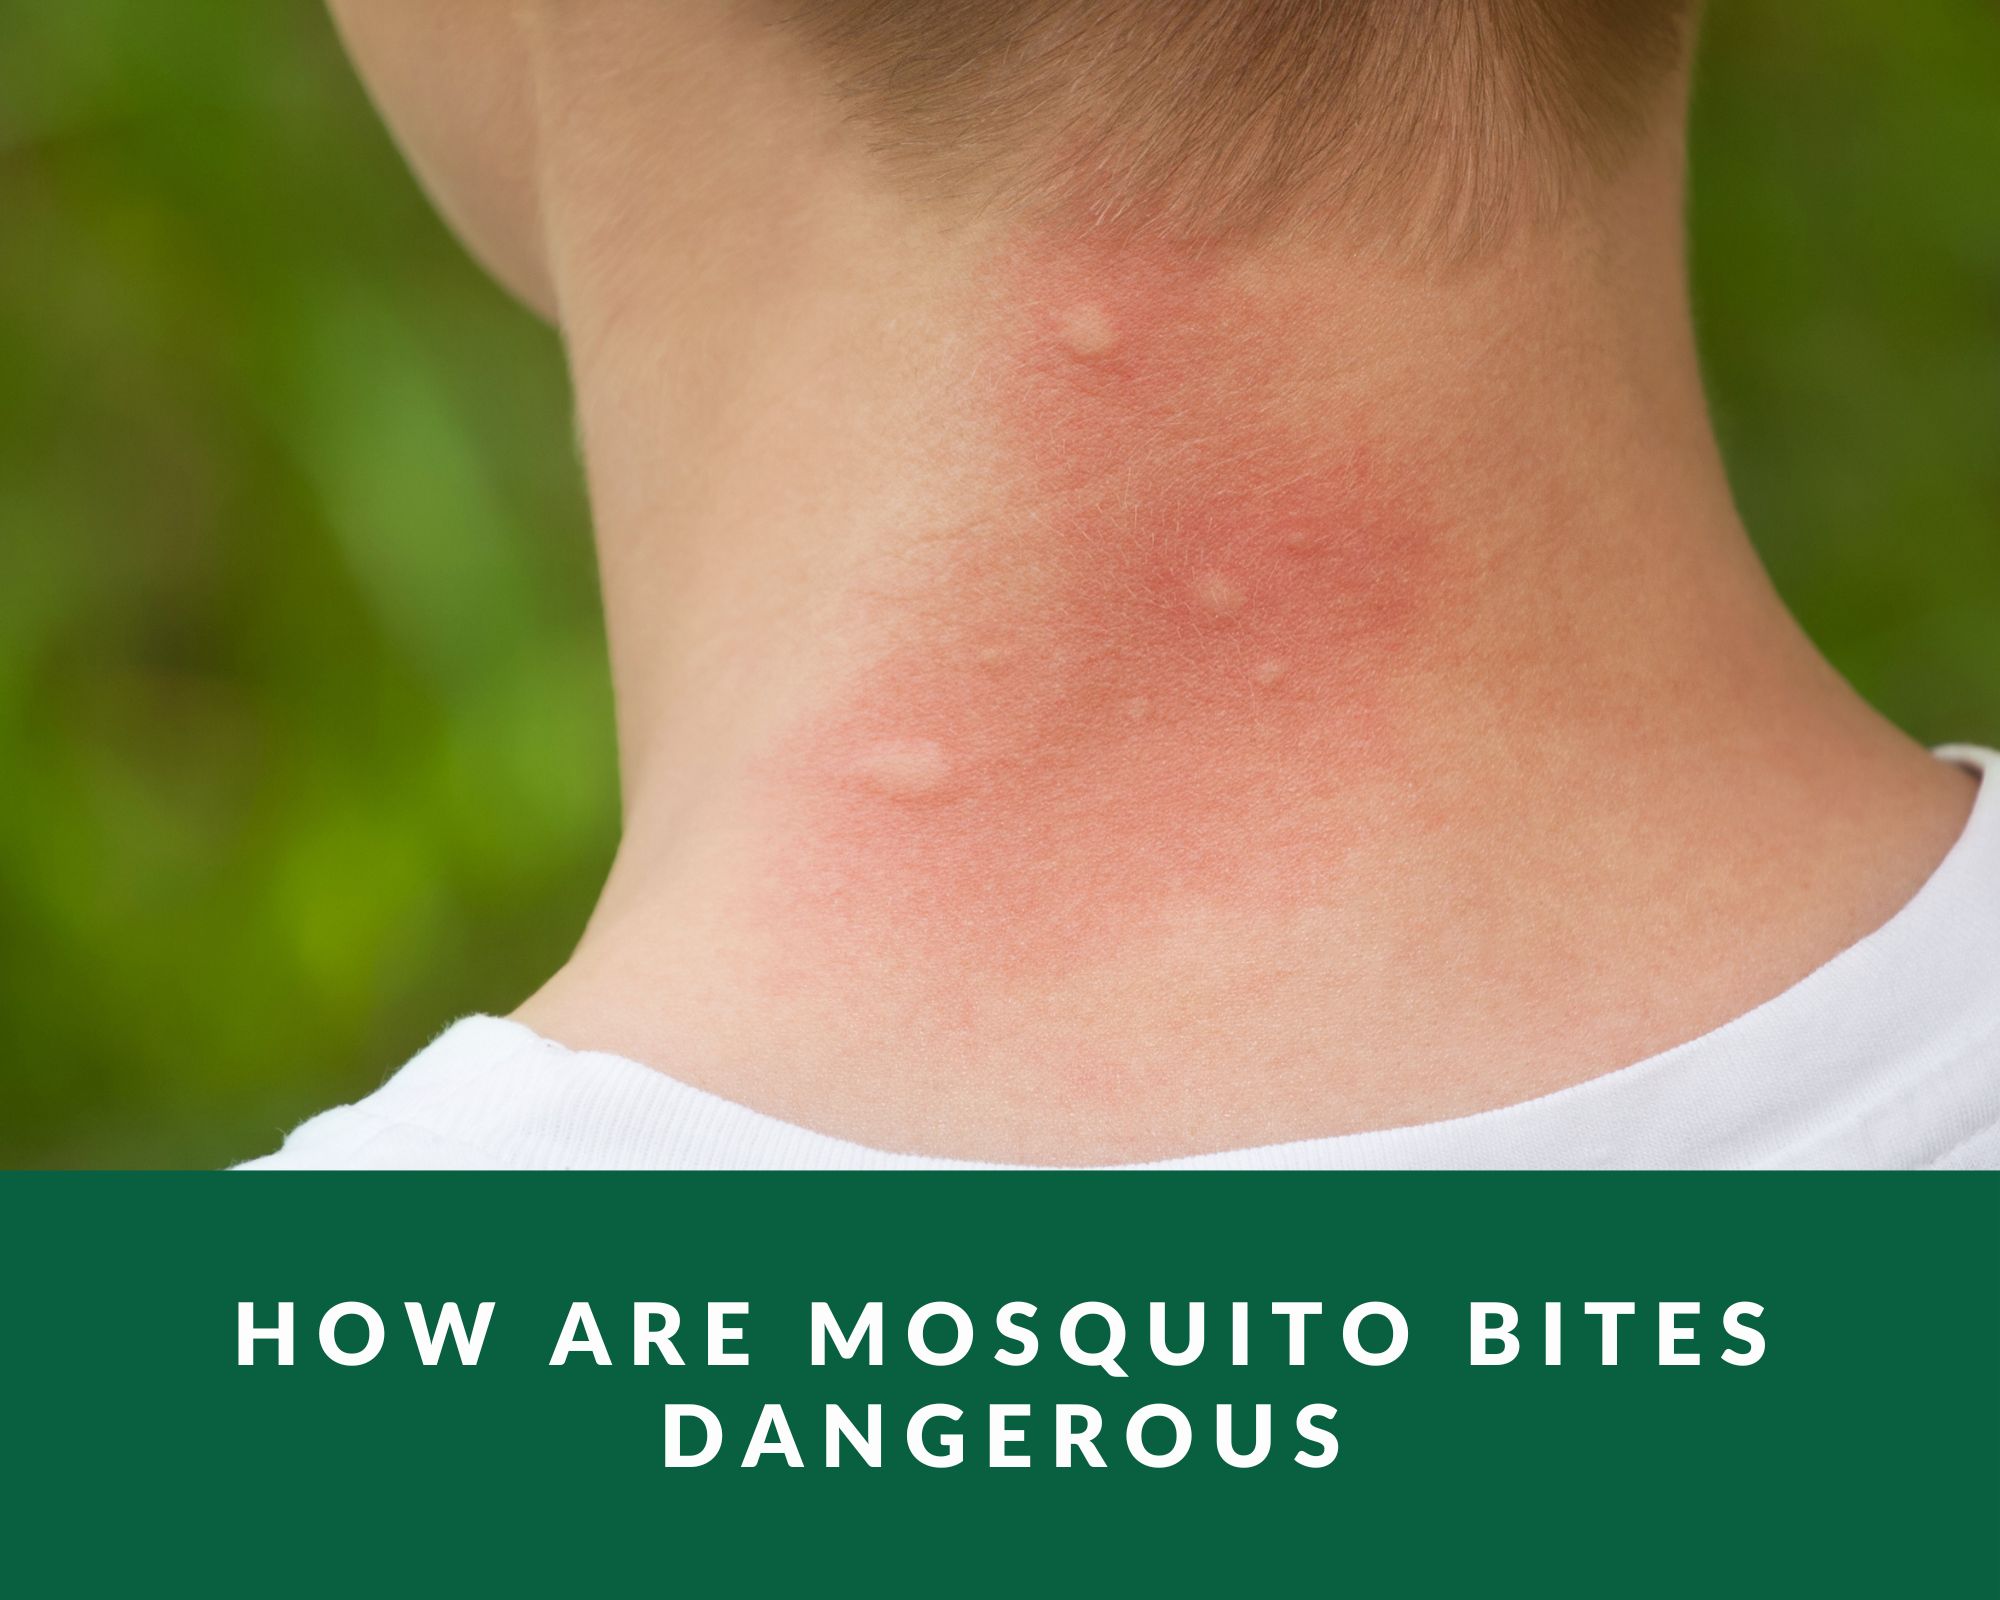 How are mosquito bites dangerous